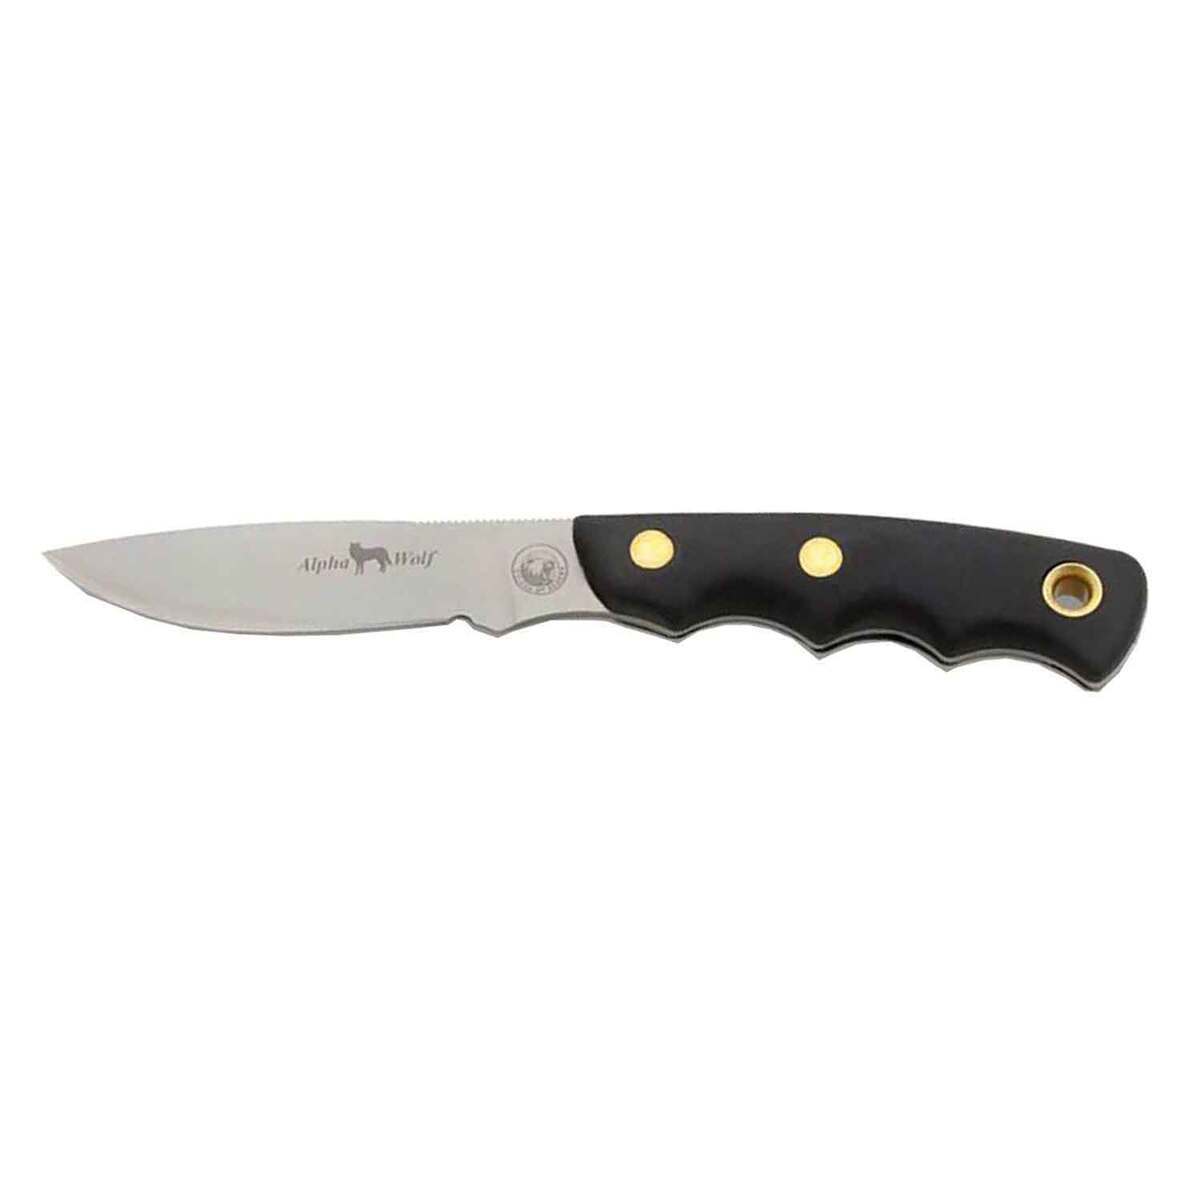 https://www.sportsmans.com/medias/knives-of-alaska-alpha-wolf-3125-inch-d2-blade-with-serge-grip-knife-black-1132483-1.jpg?context=bWFzdGVyfGltYWdlc3wxOTc4M3xpbWFnZS9qcGVnfGg2OC9oZGEvMTA4MzA5Mjk5MjAwMzAvMTEzMjQ4My0xX2Jhc2UtY29udmVyc2lvbkZvcm1hdF8xMjAwLWNvbnZlcnNpb25Gb3JtYXR8OTI5NDExMmQ2M2Q5ZGViYWIyMzhkNzgwMThiOWQ3NDA4MzRmNTJlNDVjNWQyNTdhMzU5ZjFkMzdkNGU5NTRiZQ